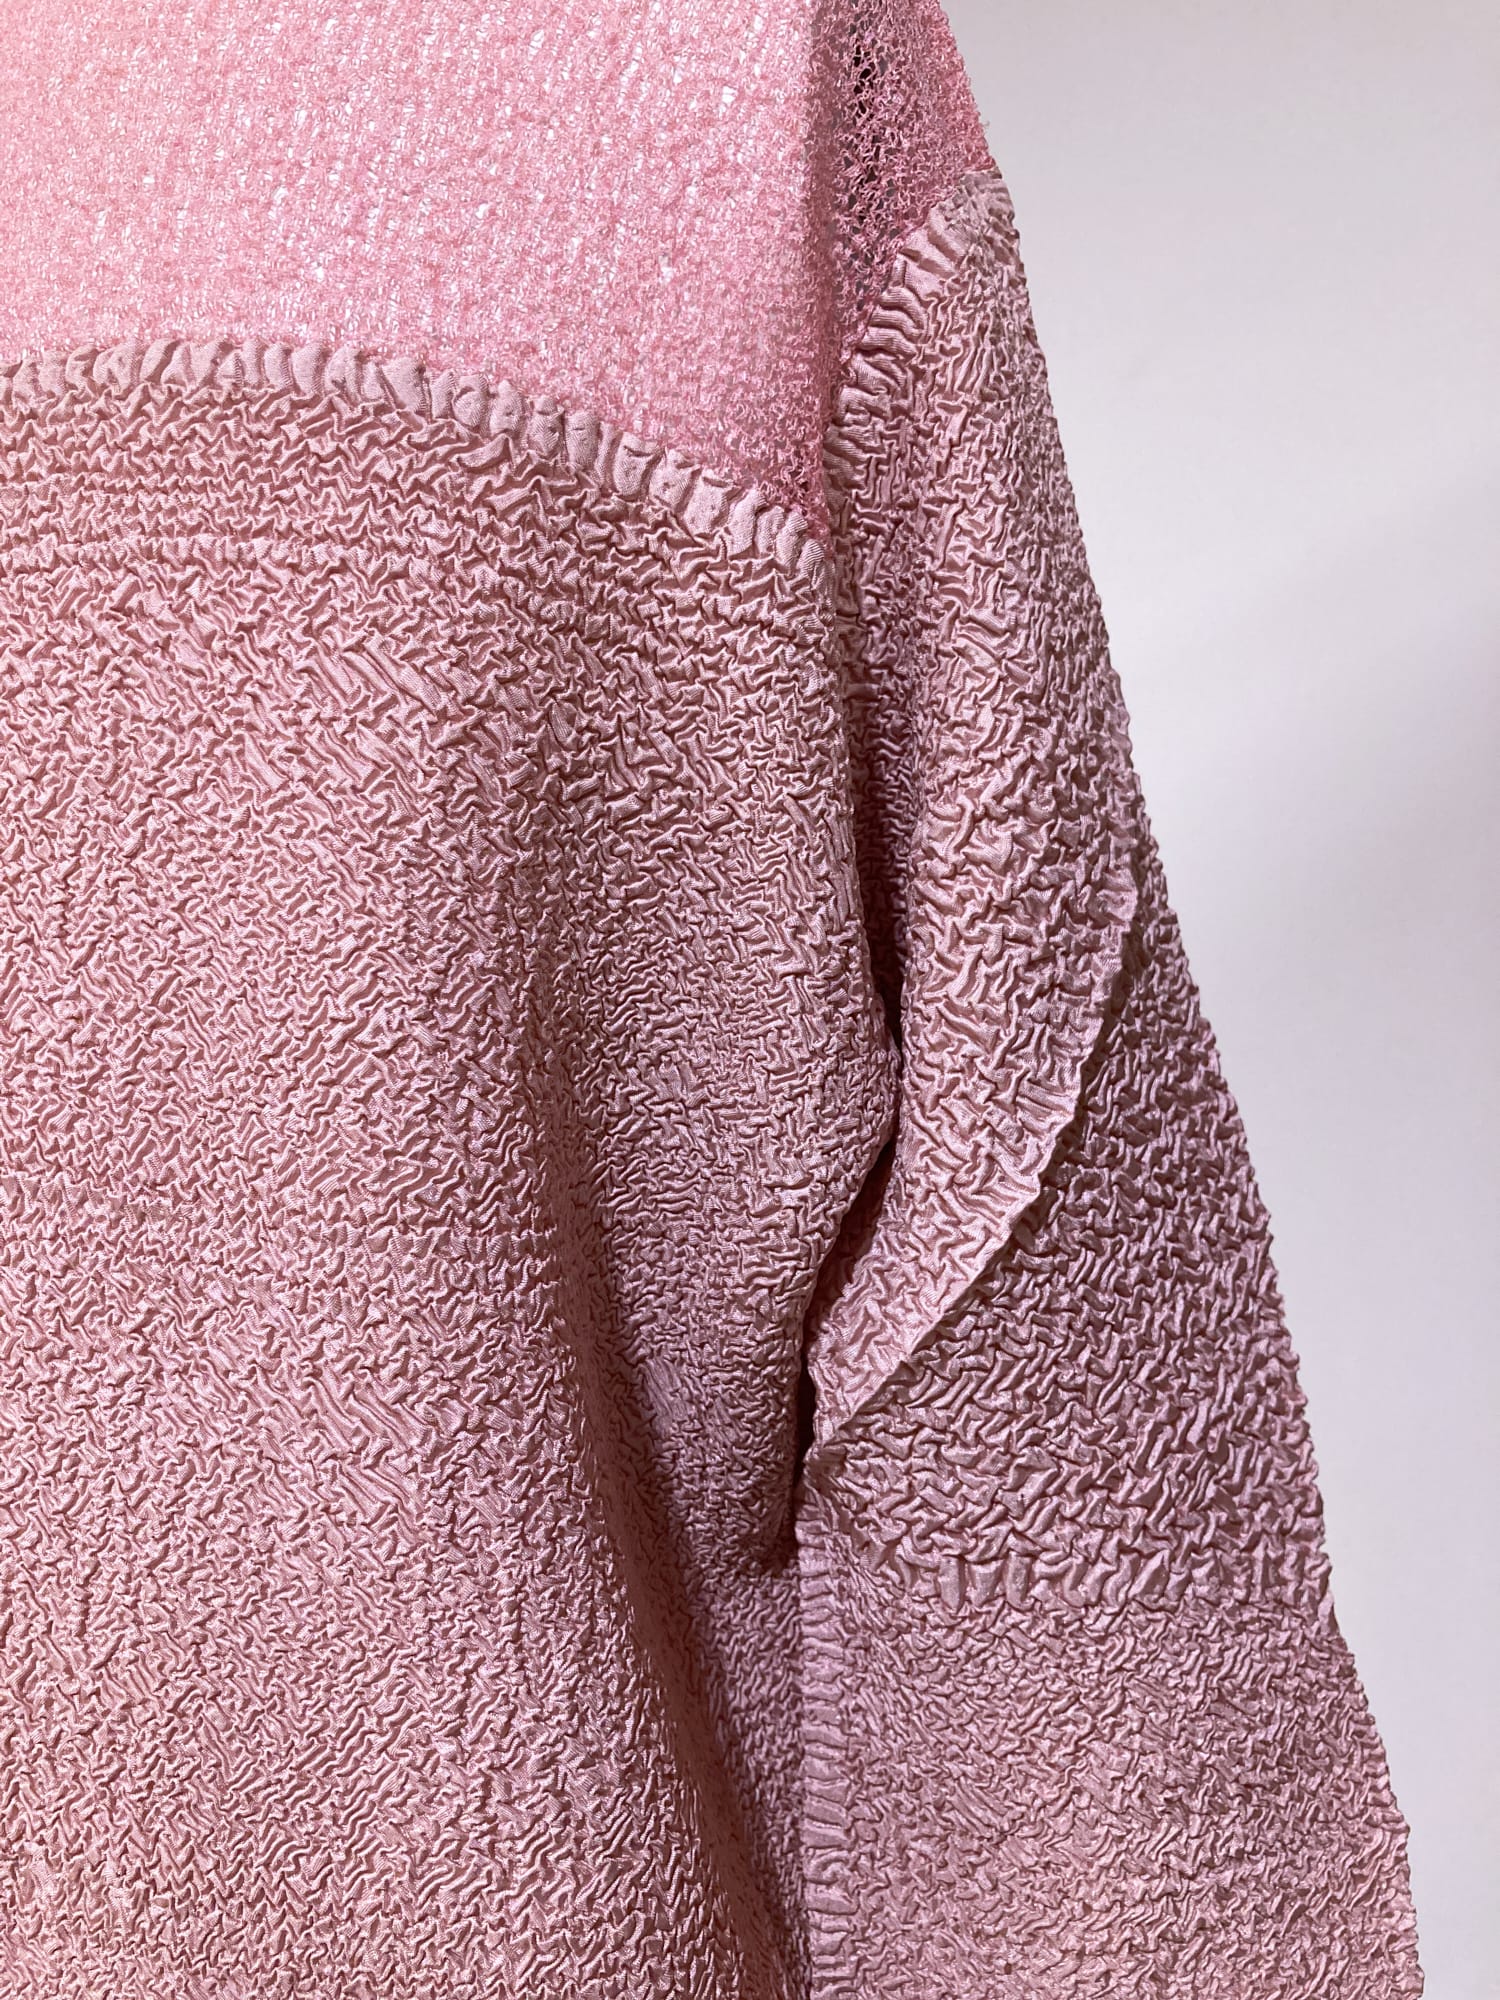 Wrinqle Inoue Pleats pink wrinkled poly mock neck top with sheer shoulder panel